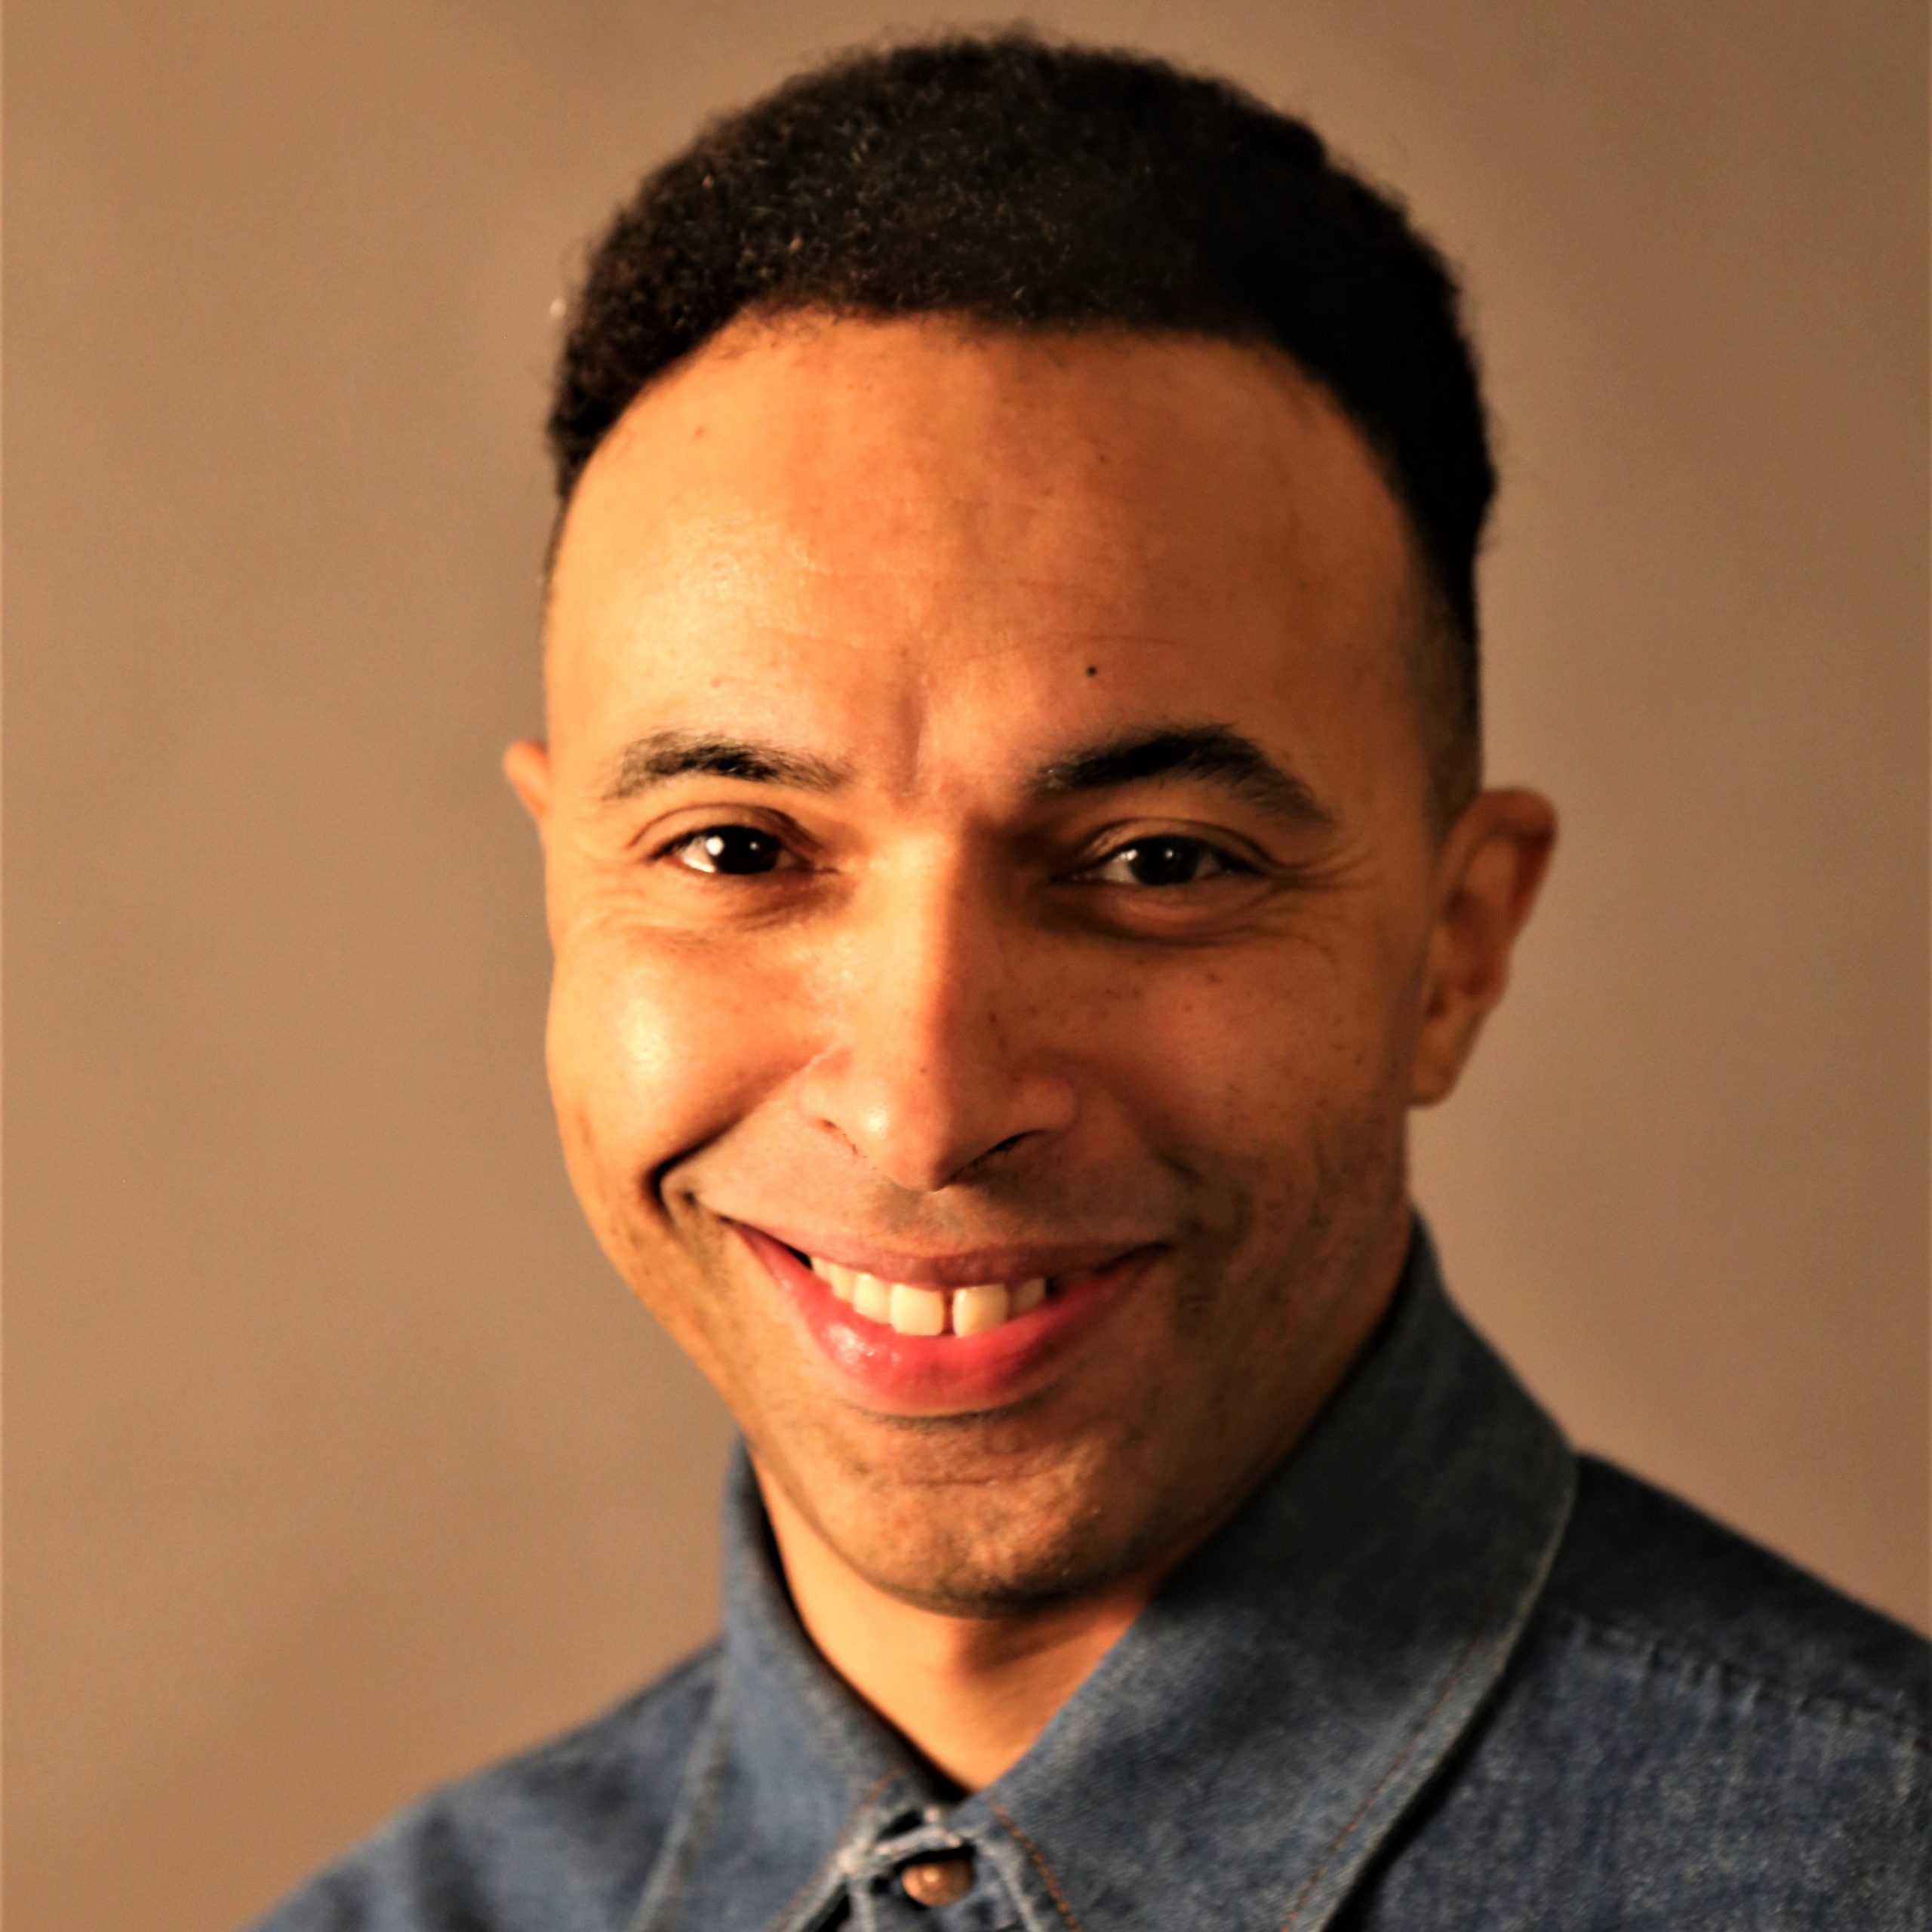 Kwesi Johnson. A headshot of a smiling man with light brown skin and short dark hair.